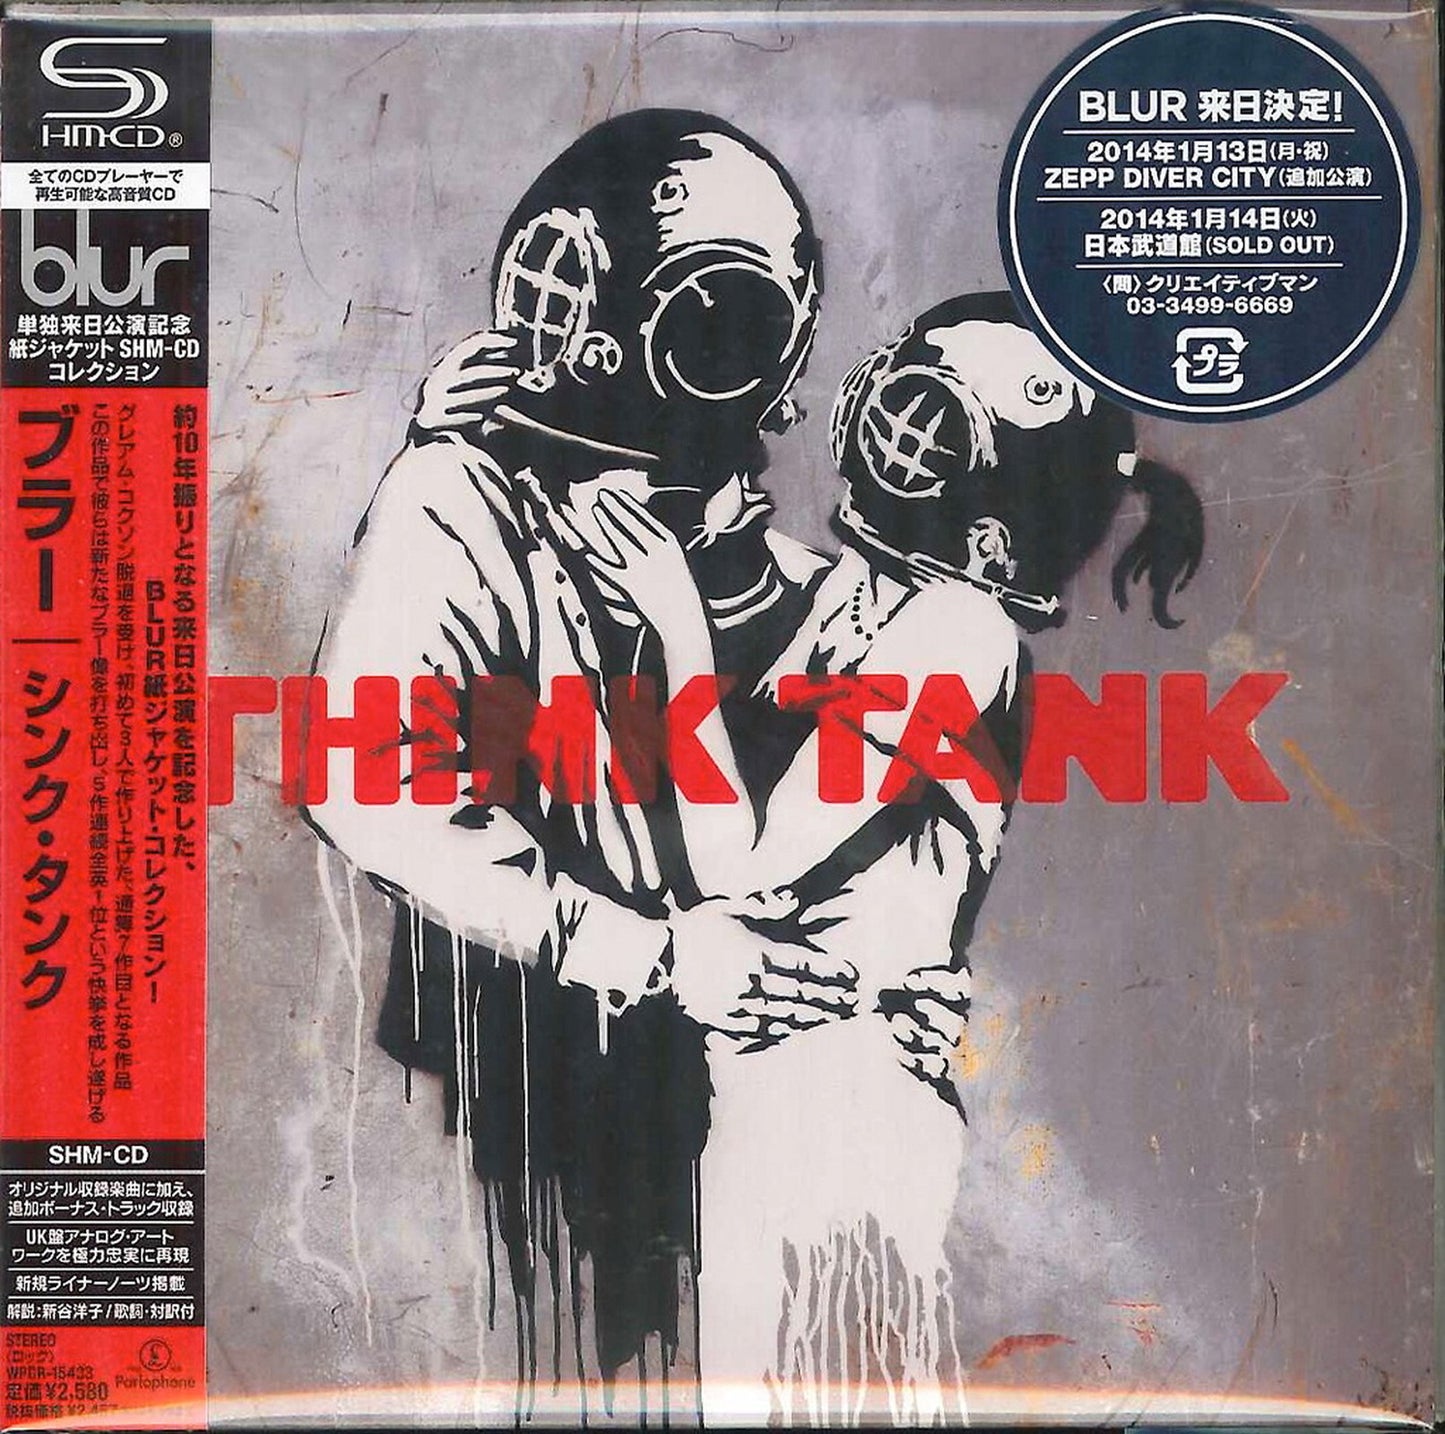 Blur - Think Tank - Japan  Mini LP SHM-CD Bonus Track Limited Edition